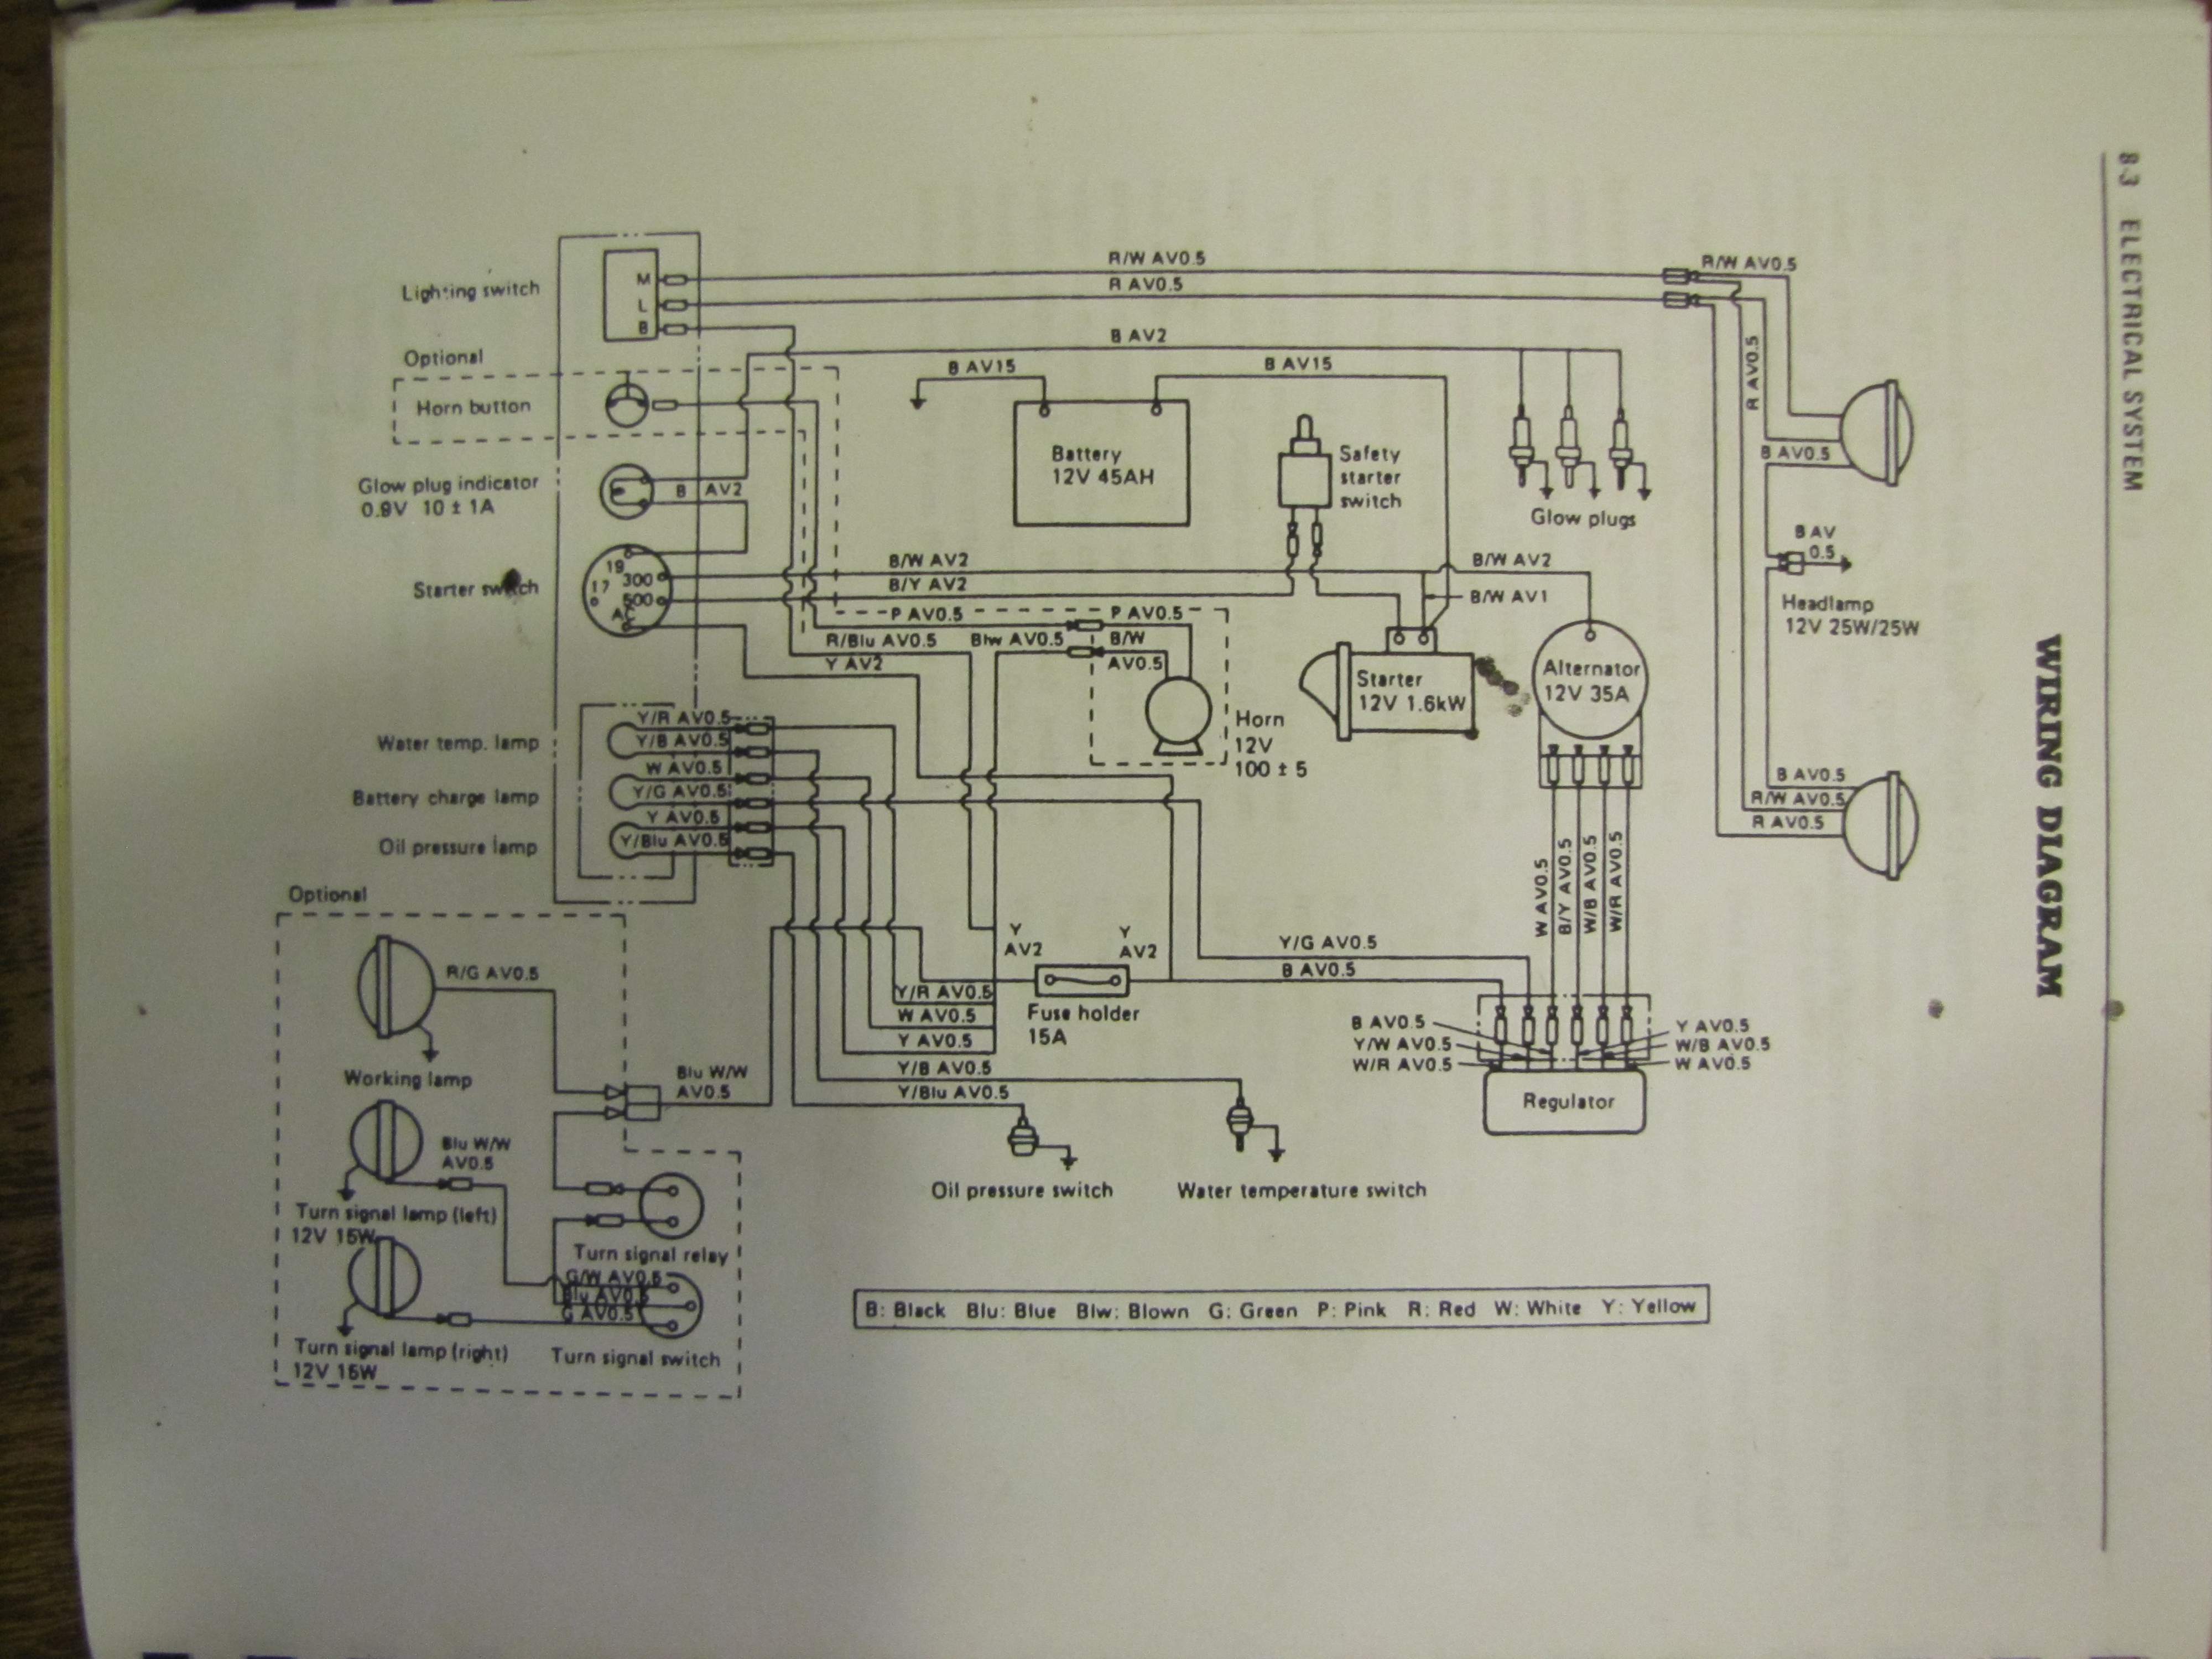 Mitsubishi Tractor Wiring Diagram. Mitsubishi. Home Wiring Diagrams